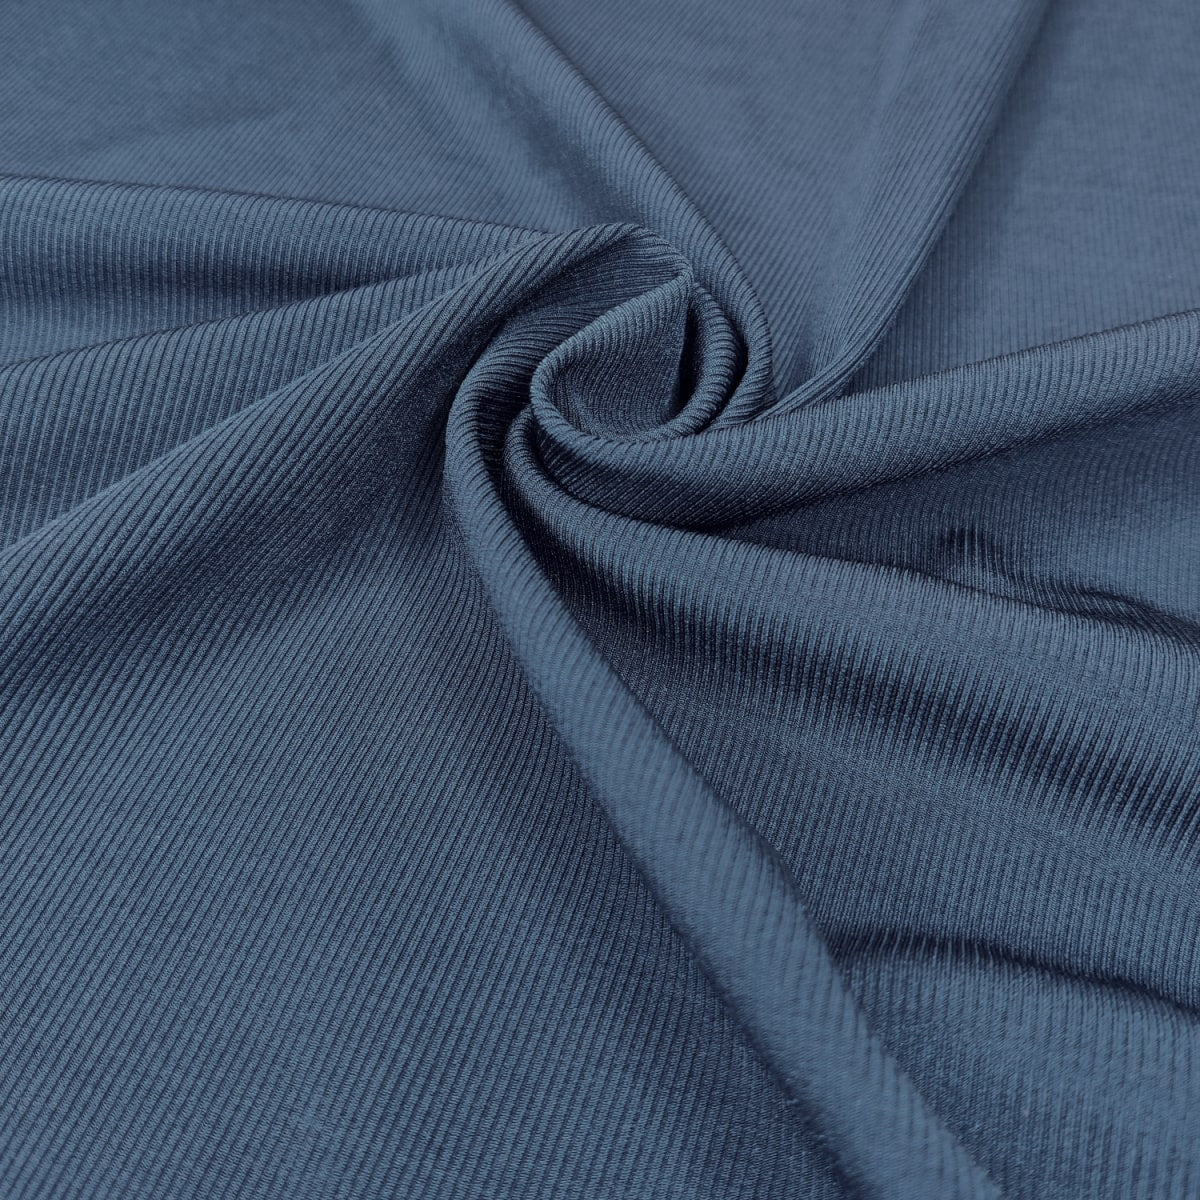 Micro Rib Knit Swimsuit Fabric - UV Protection - Navy Blue